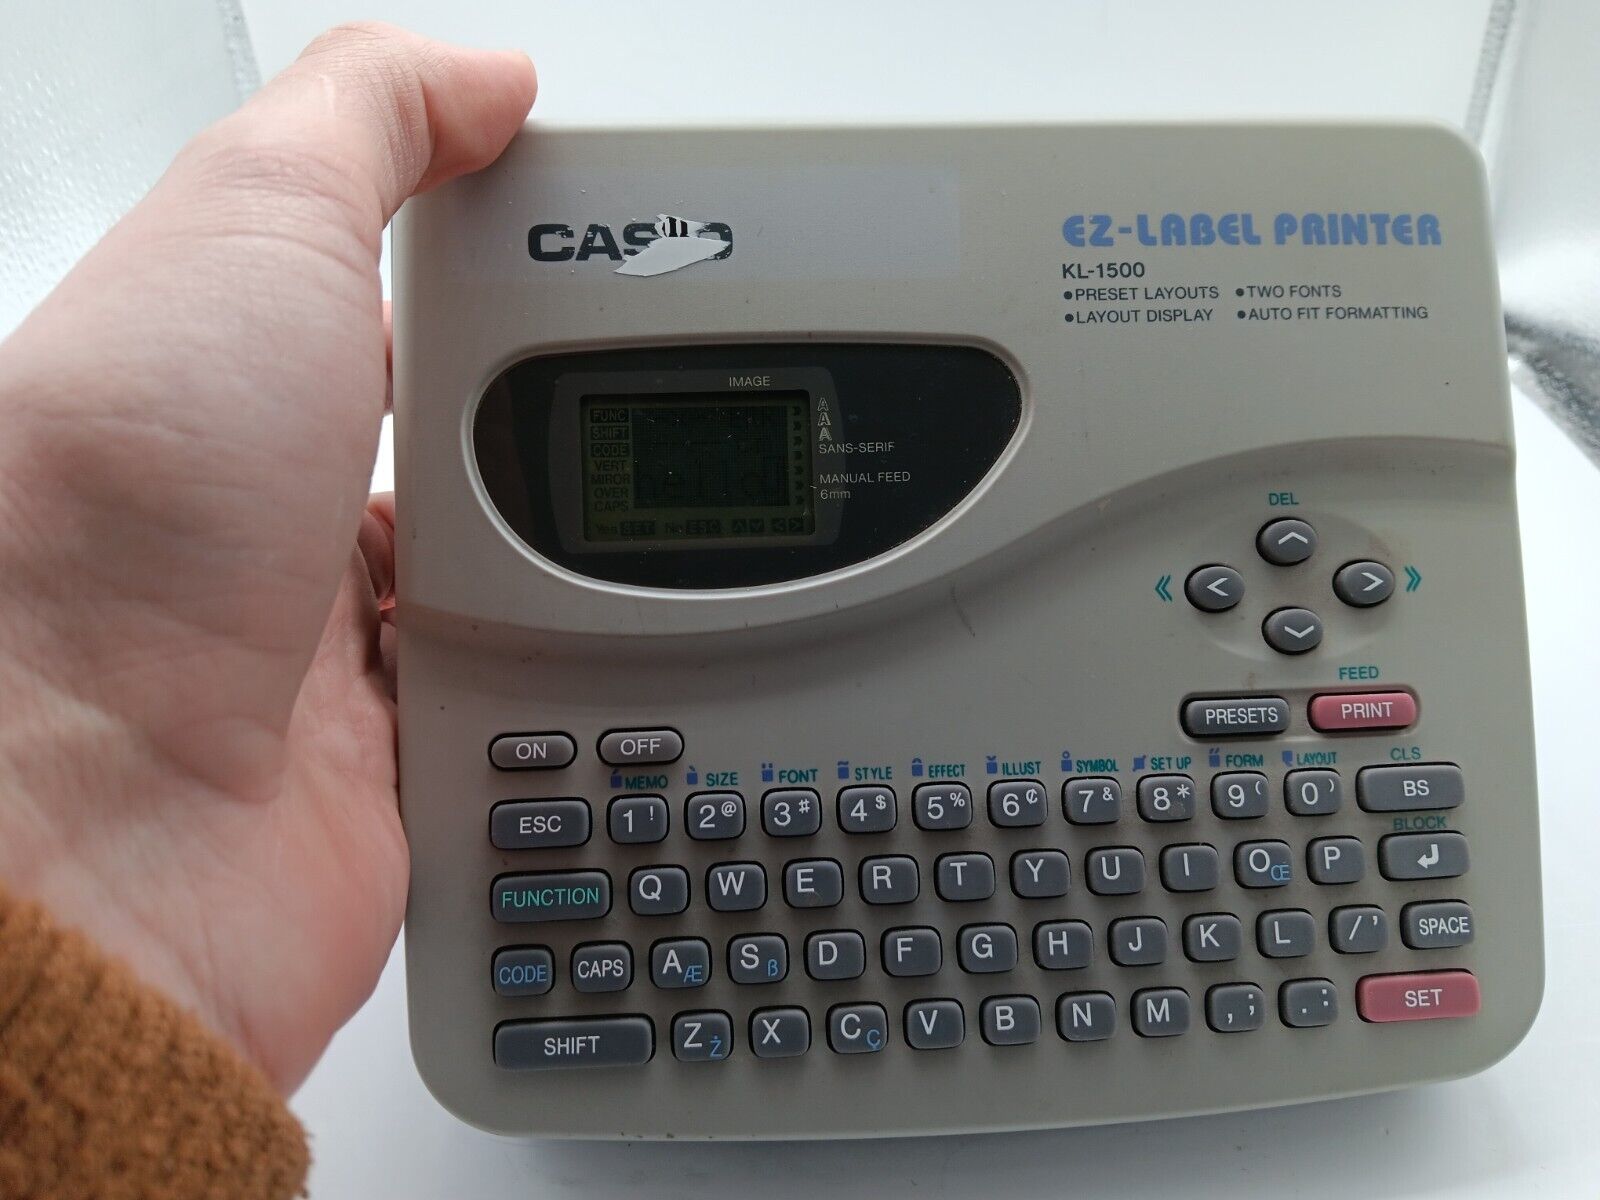 Primary image for Casio KL-1500 label printer